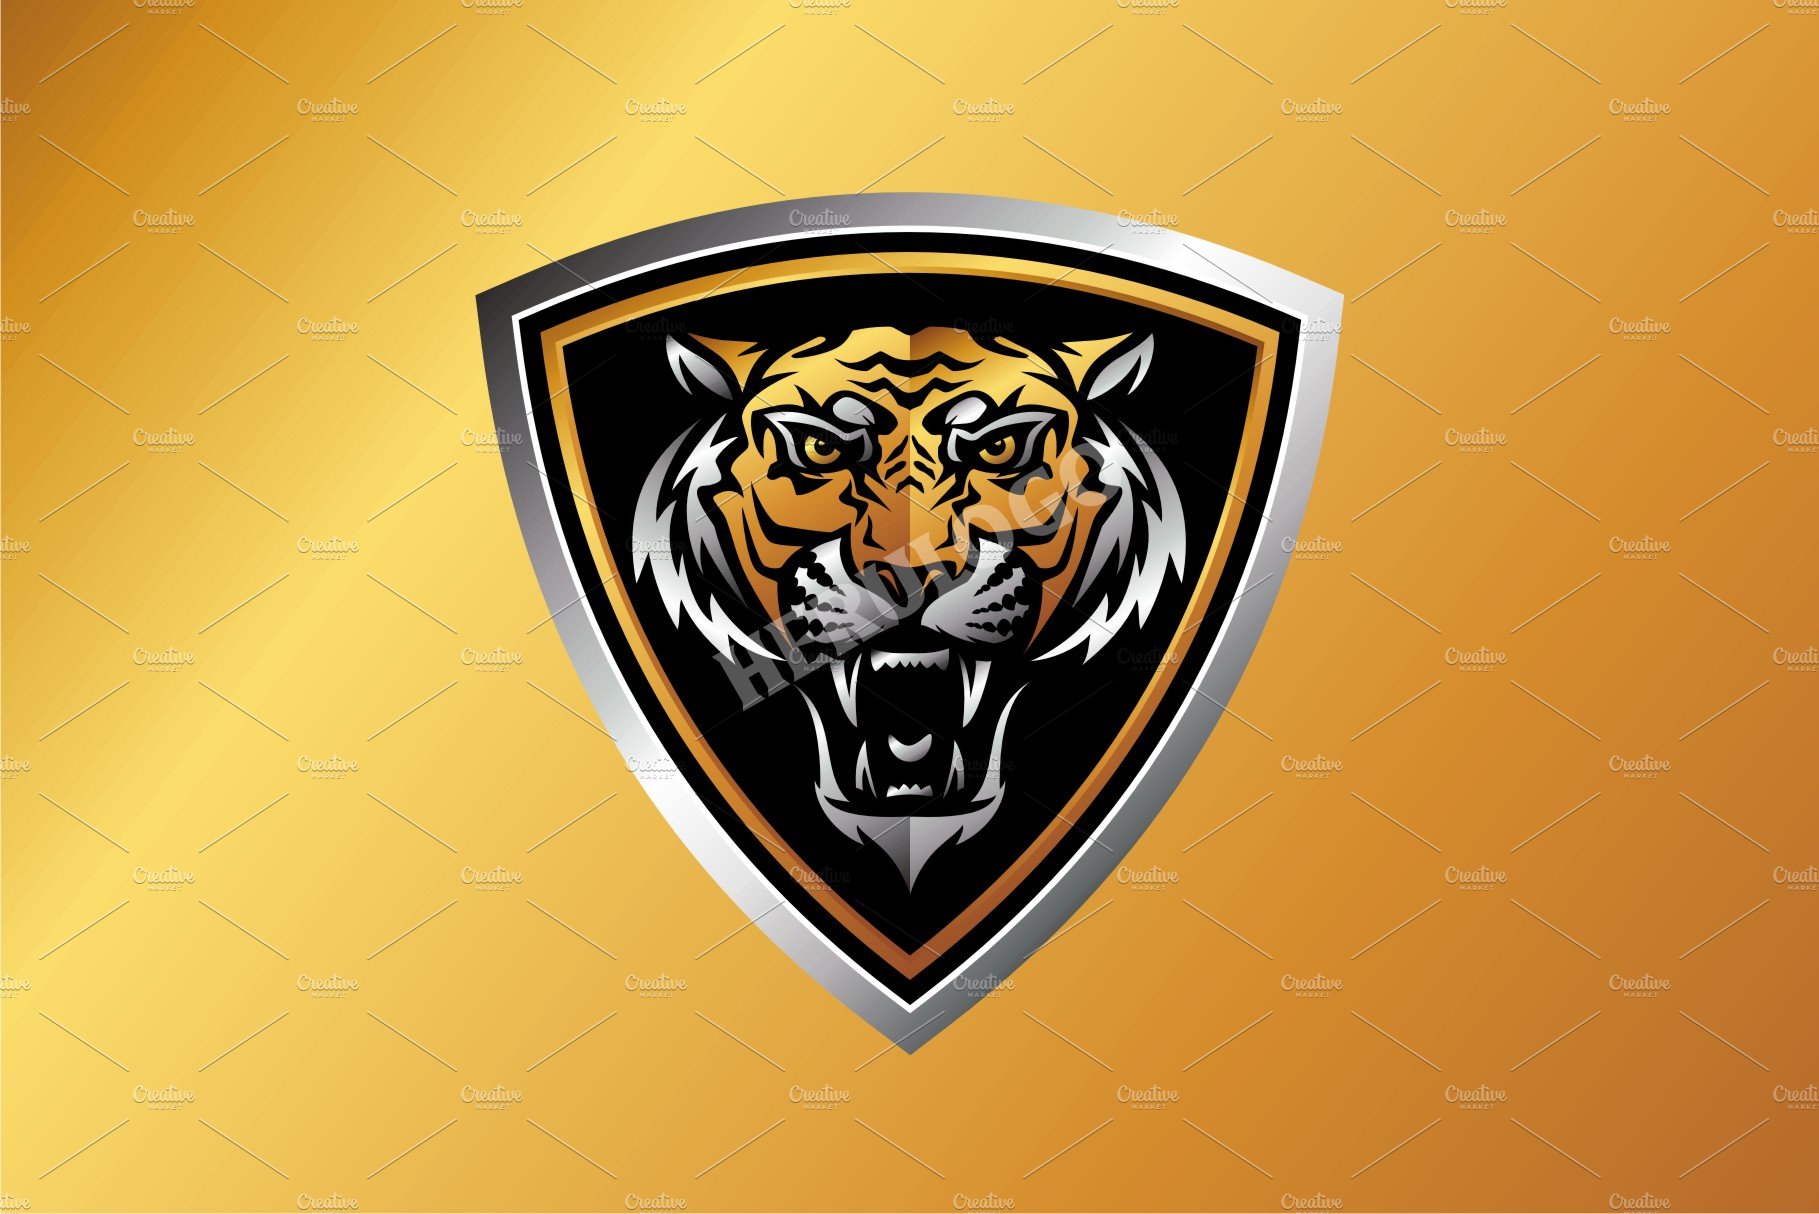 Golden Tiger cover image.